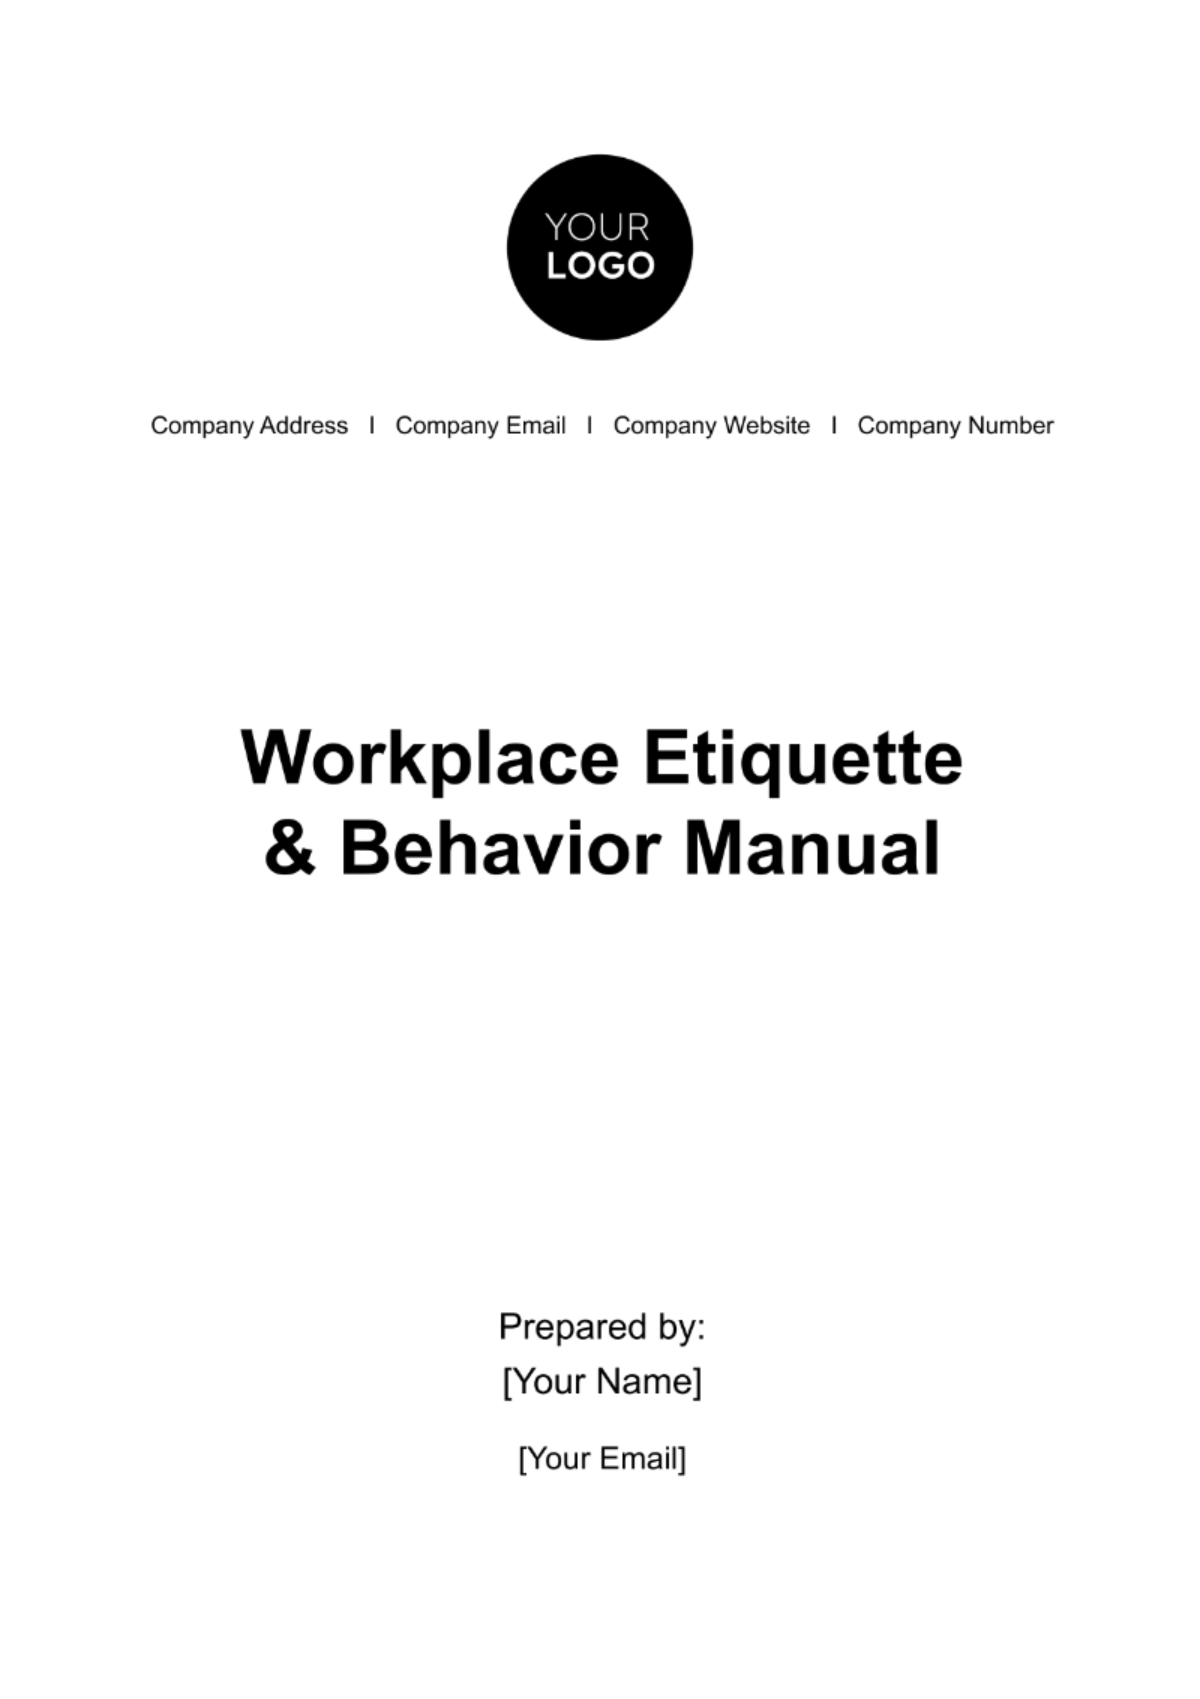 Free Workplace Etiquette & Behavior Manual HR Template